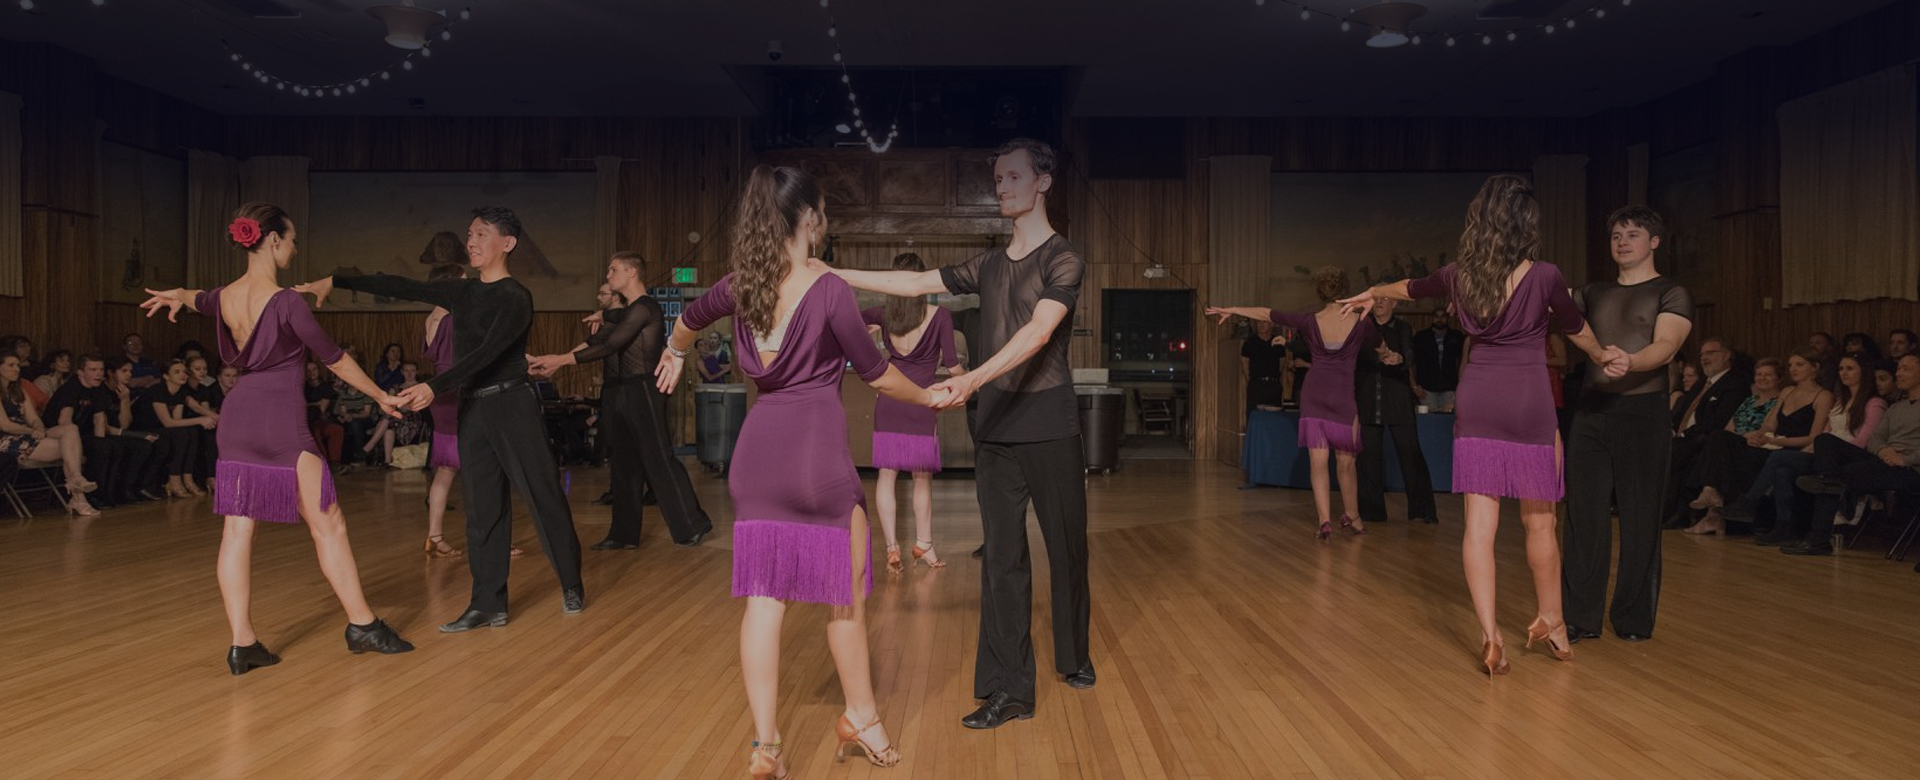 About Idaho Dance Sport